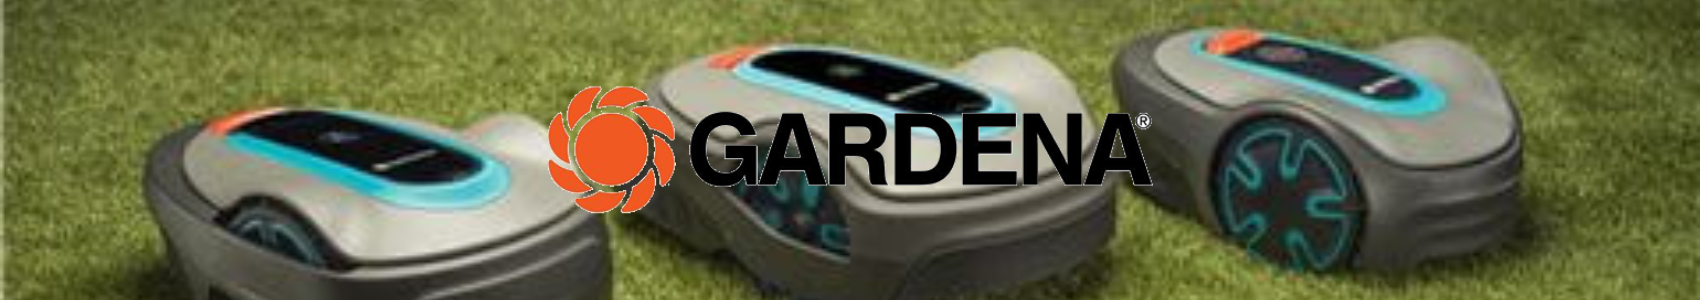 Transparent Gardena logo banner